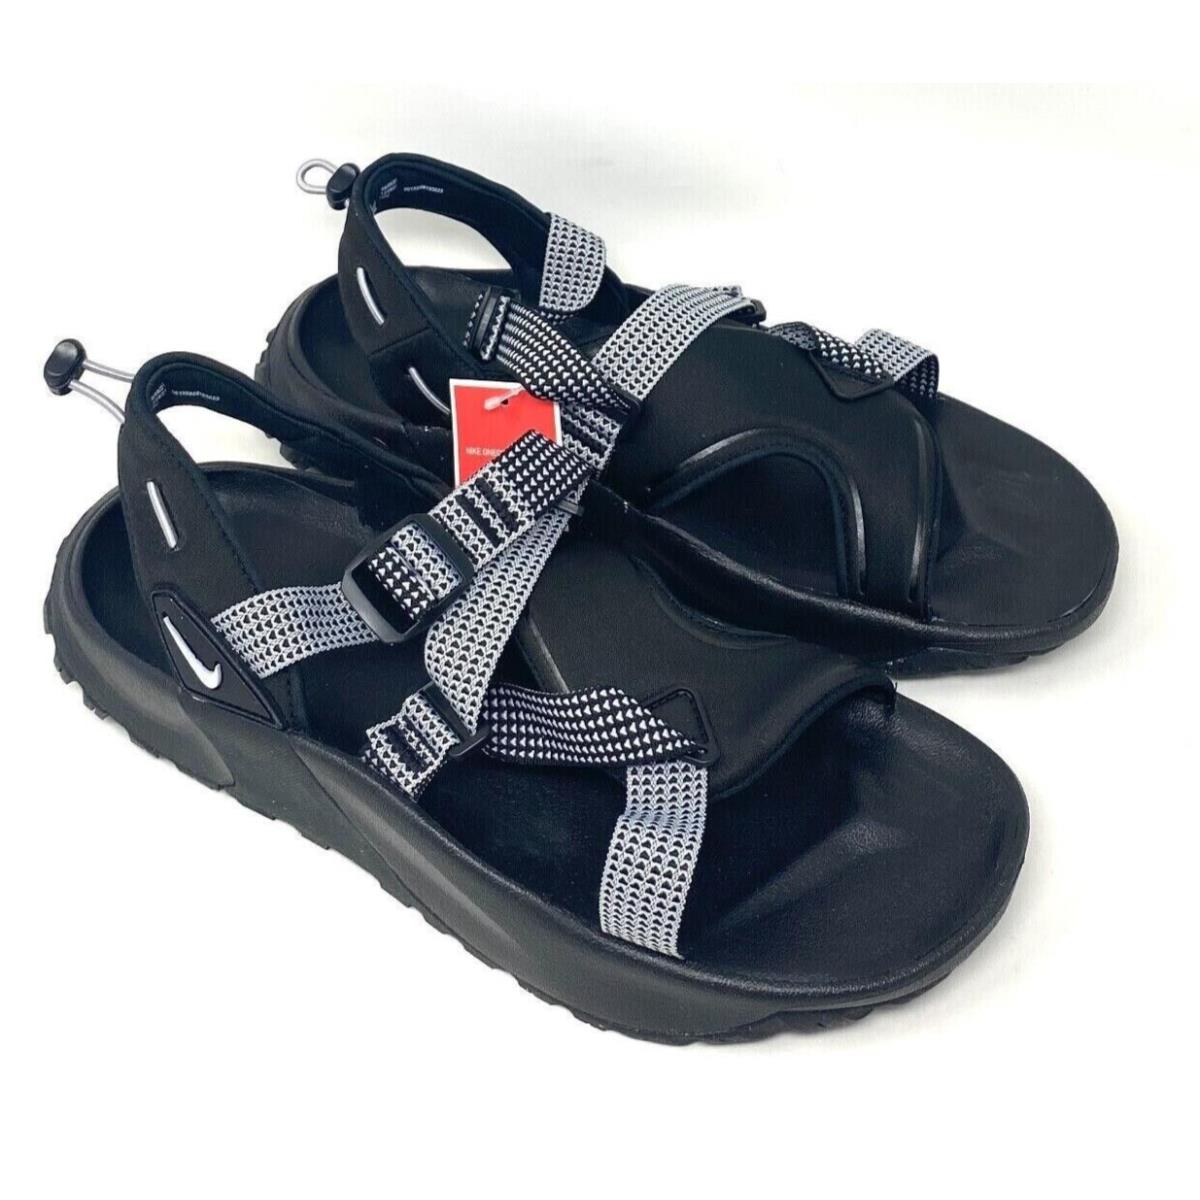 Nike shoes Sandals - Black 0